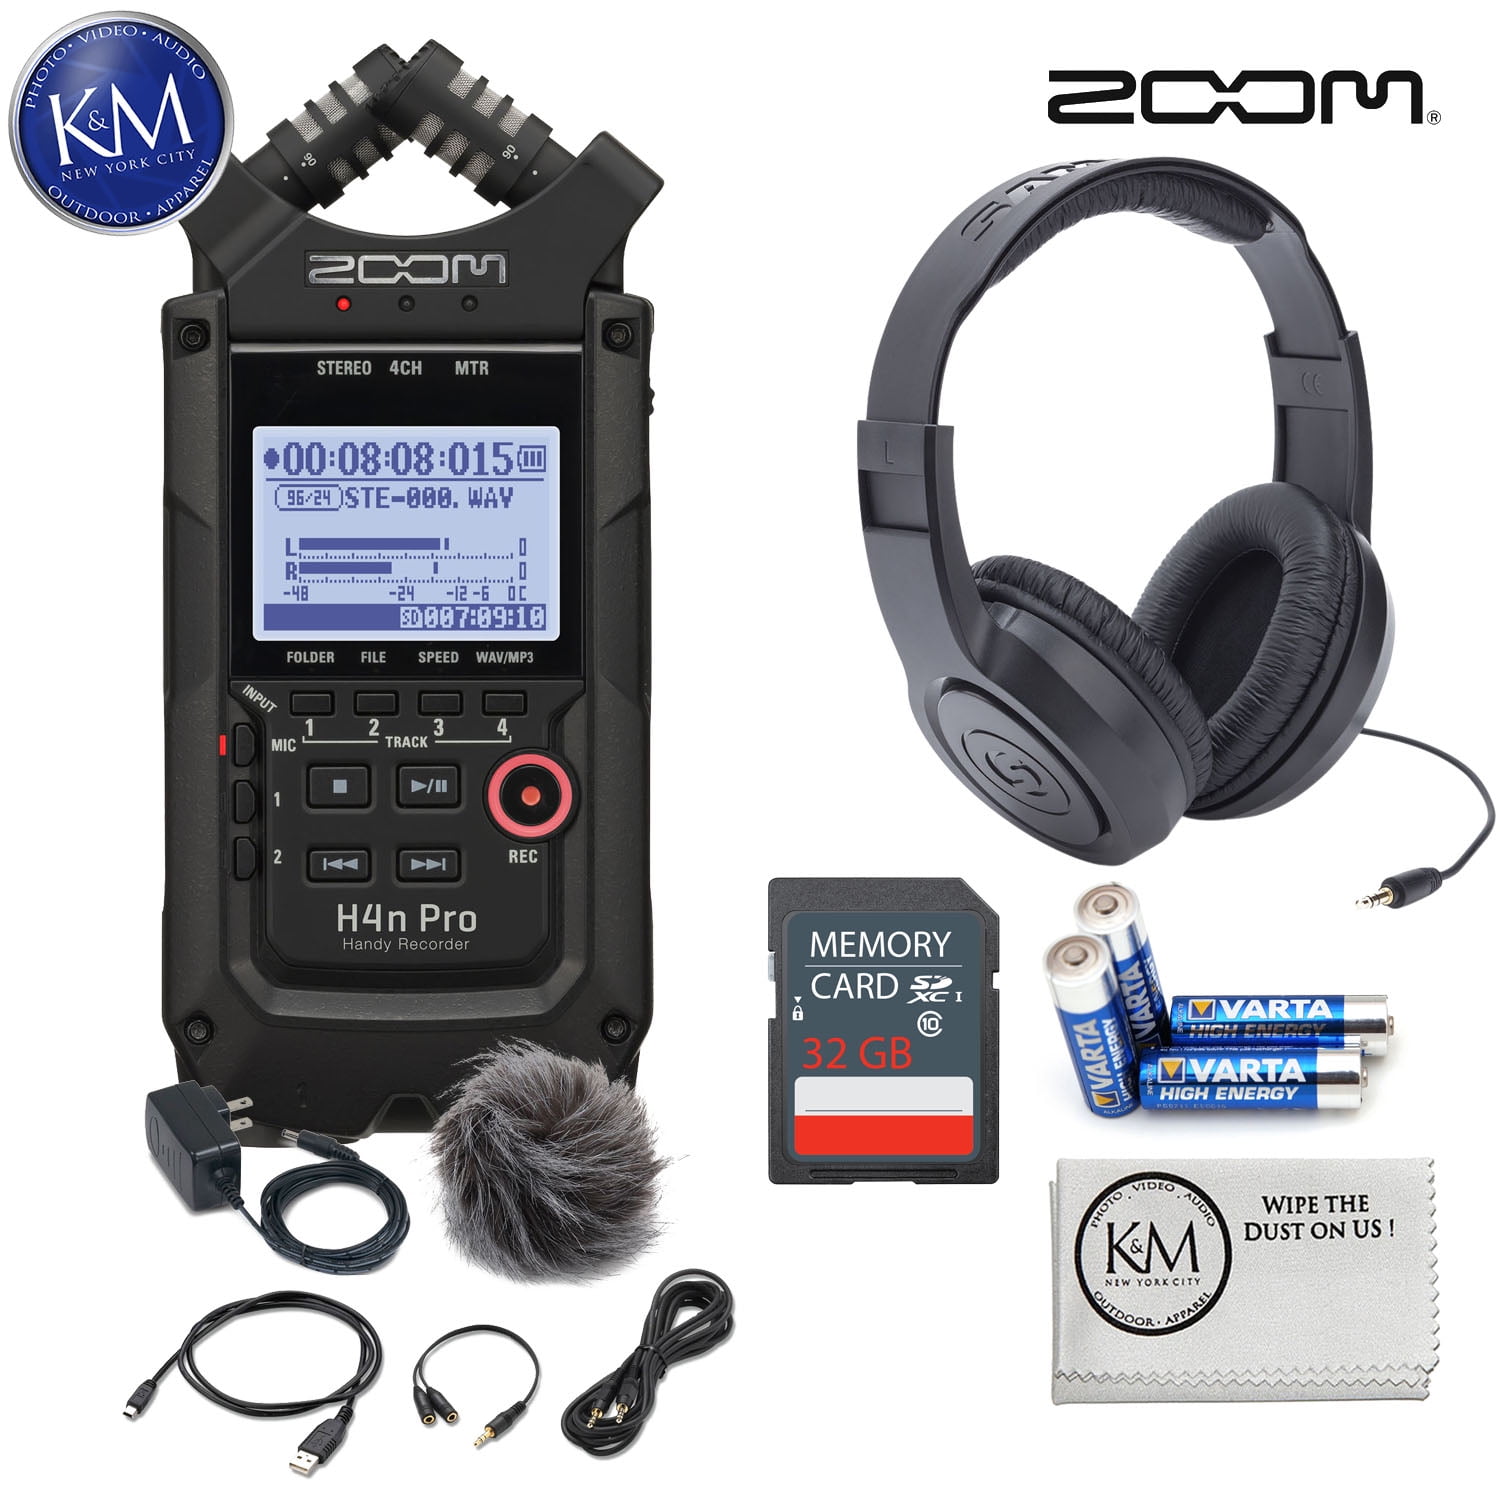 Zoom H4n 4-Channel Portable Recorder (Black) w/ 32GB SD Card, Headphones & APH-4nPro Accessory - Walmart.com